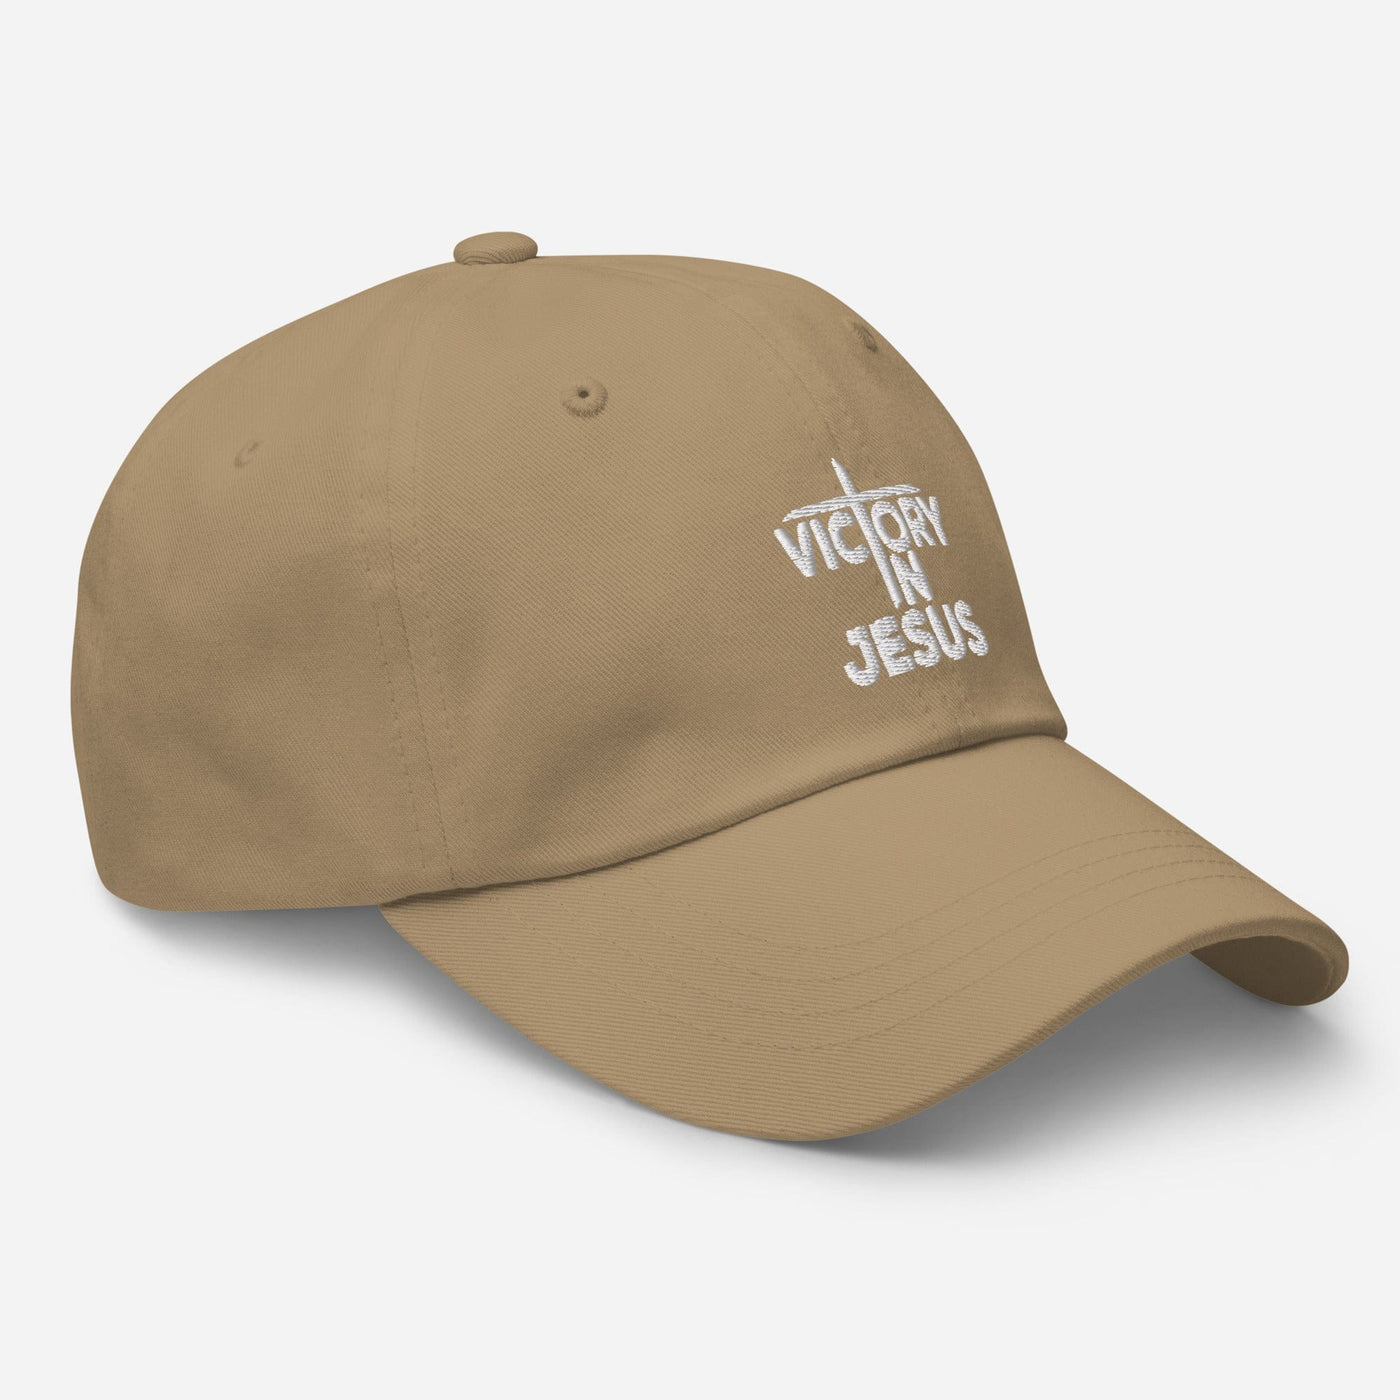 F&H Christian Victory in Jesus Baseball Hat